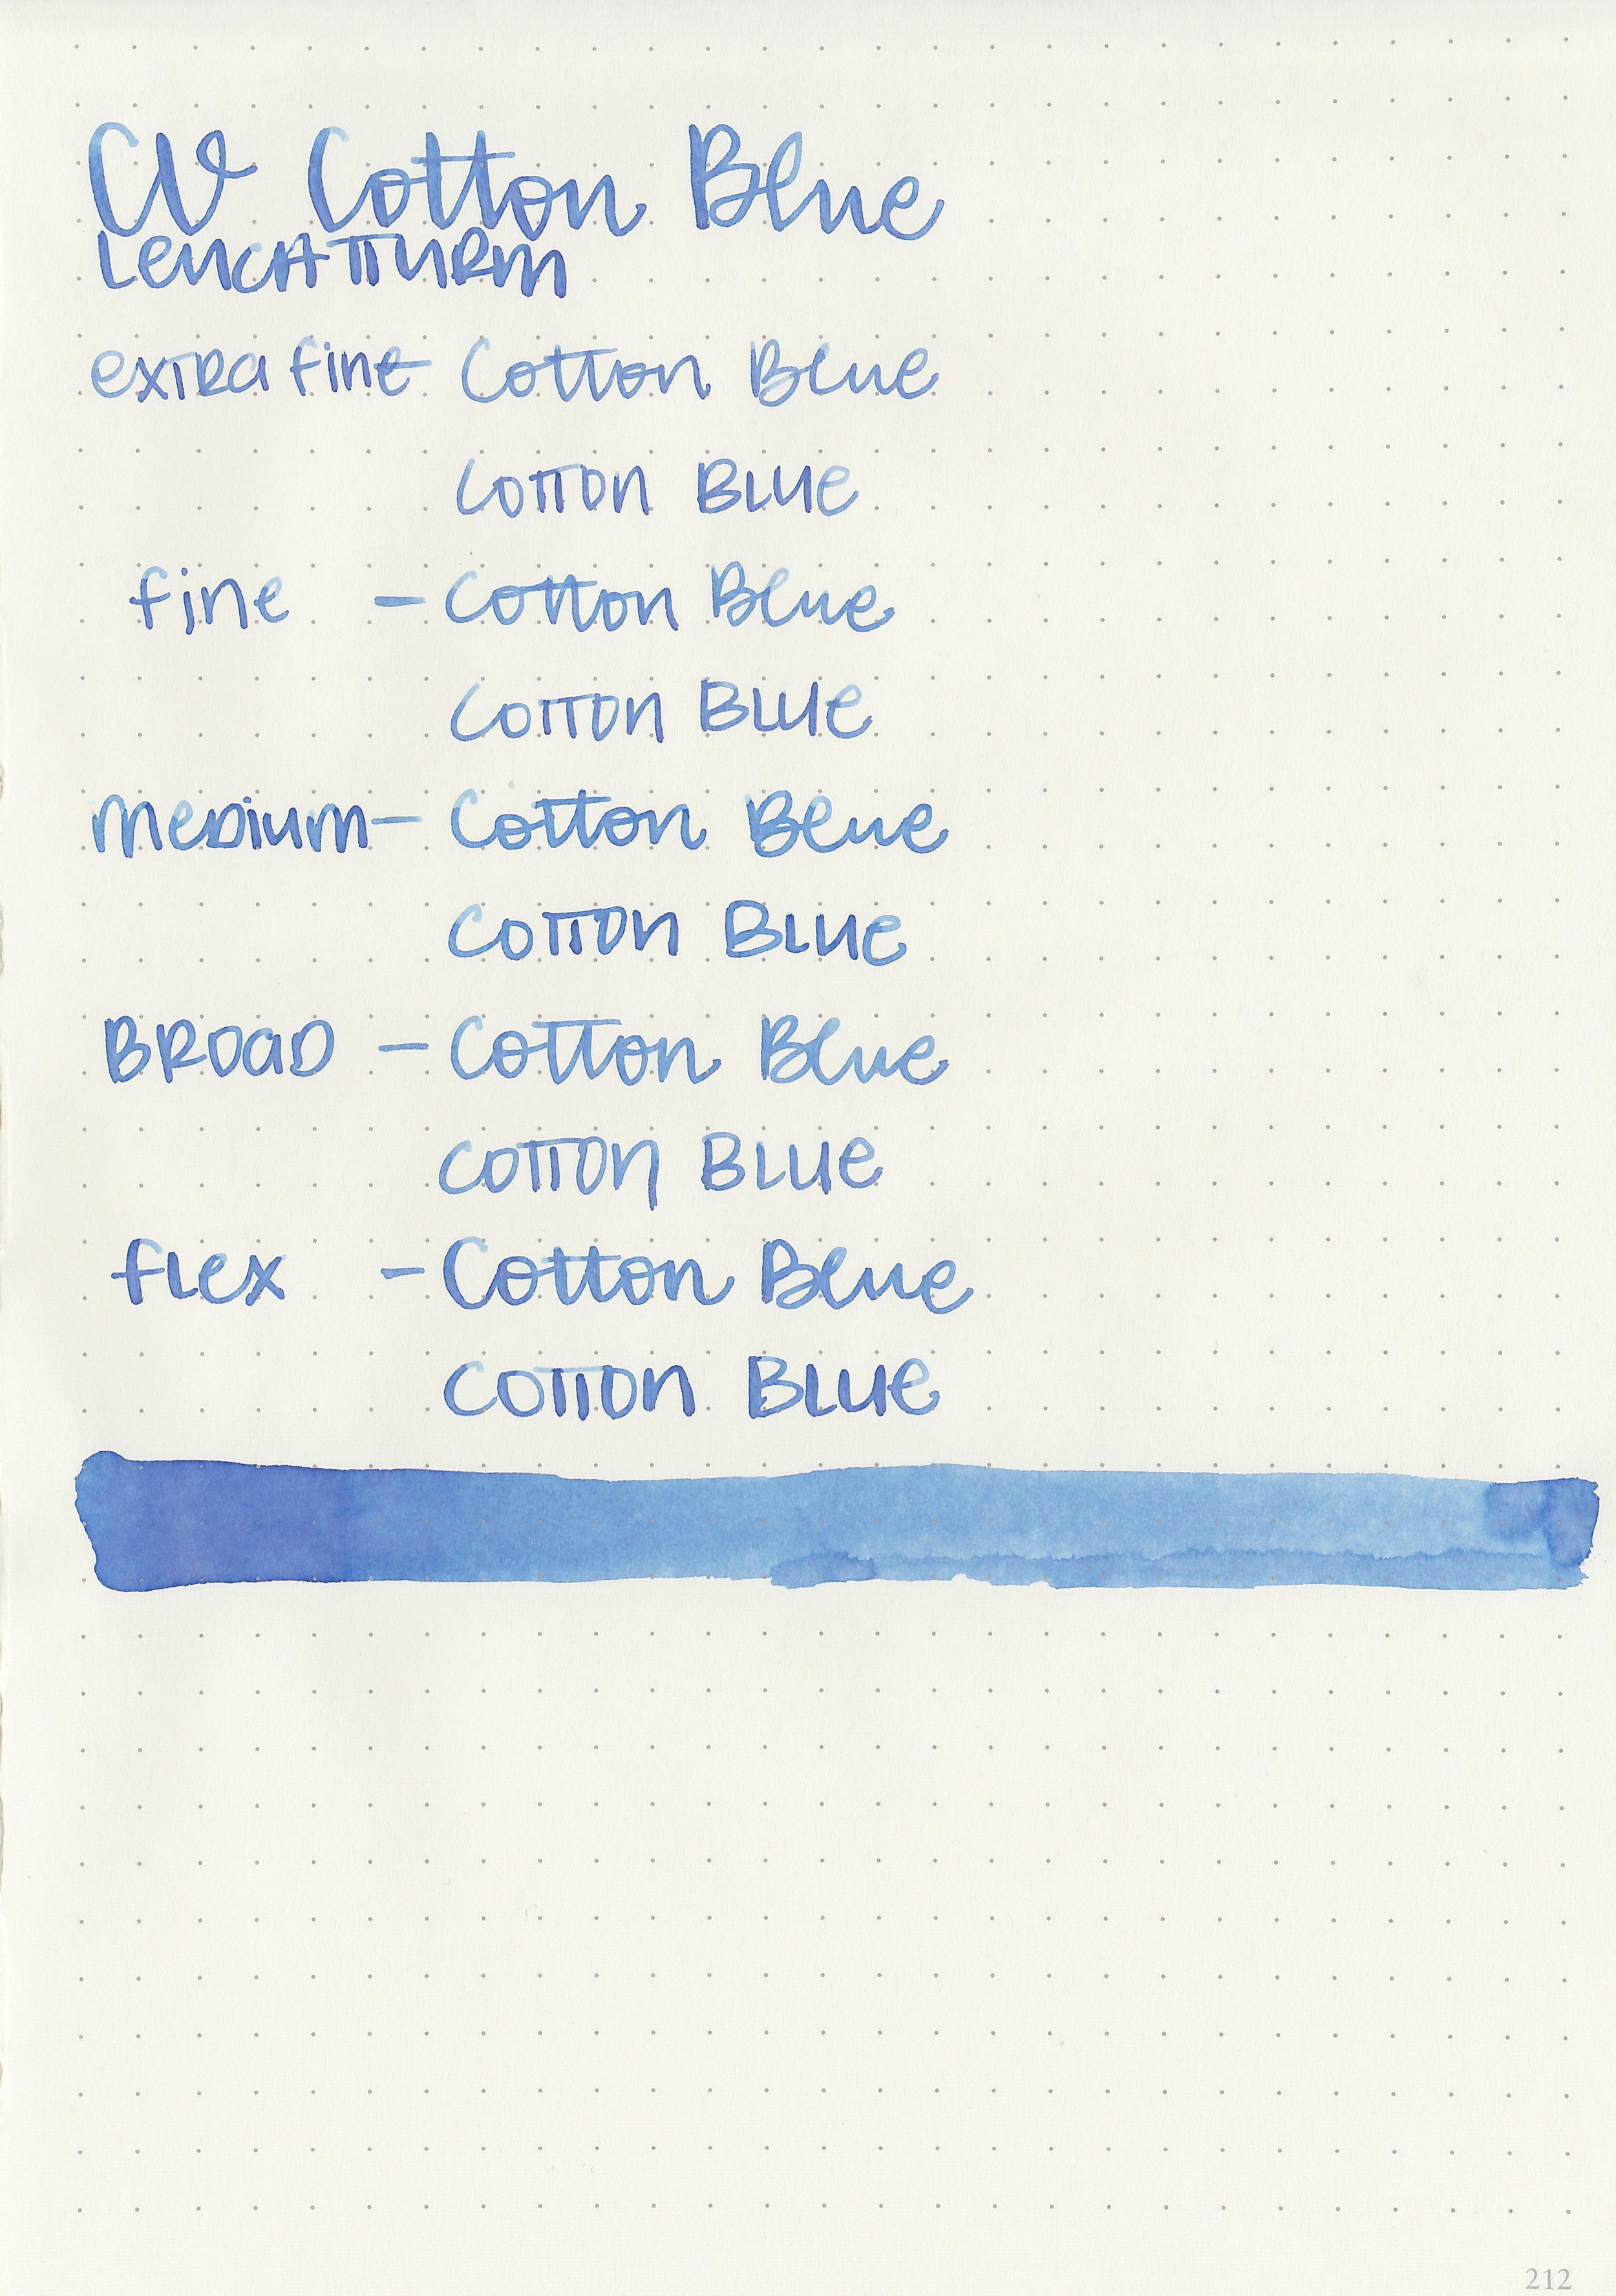 cv-cotton-blue-10.jpg